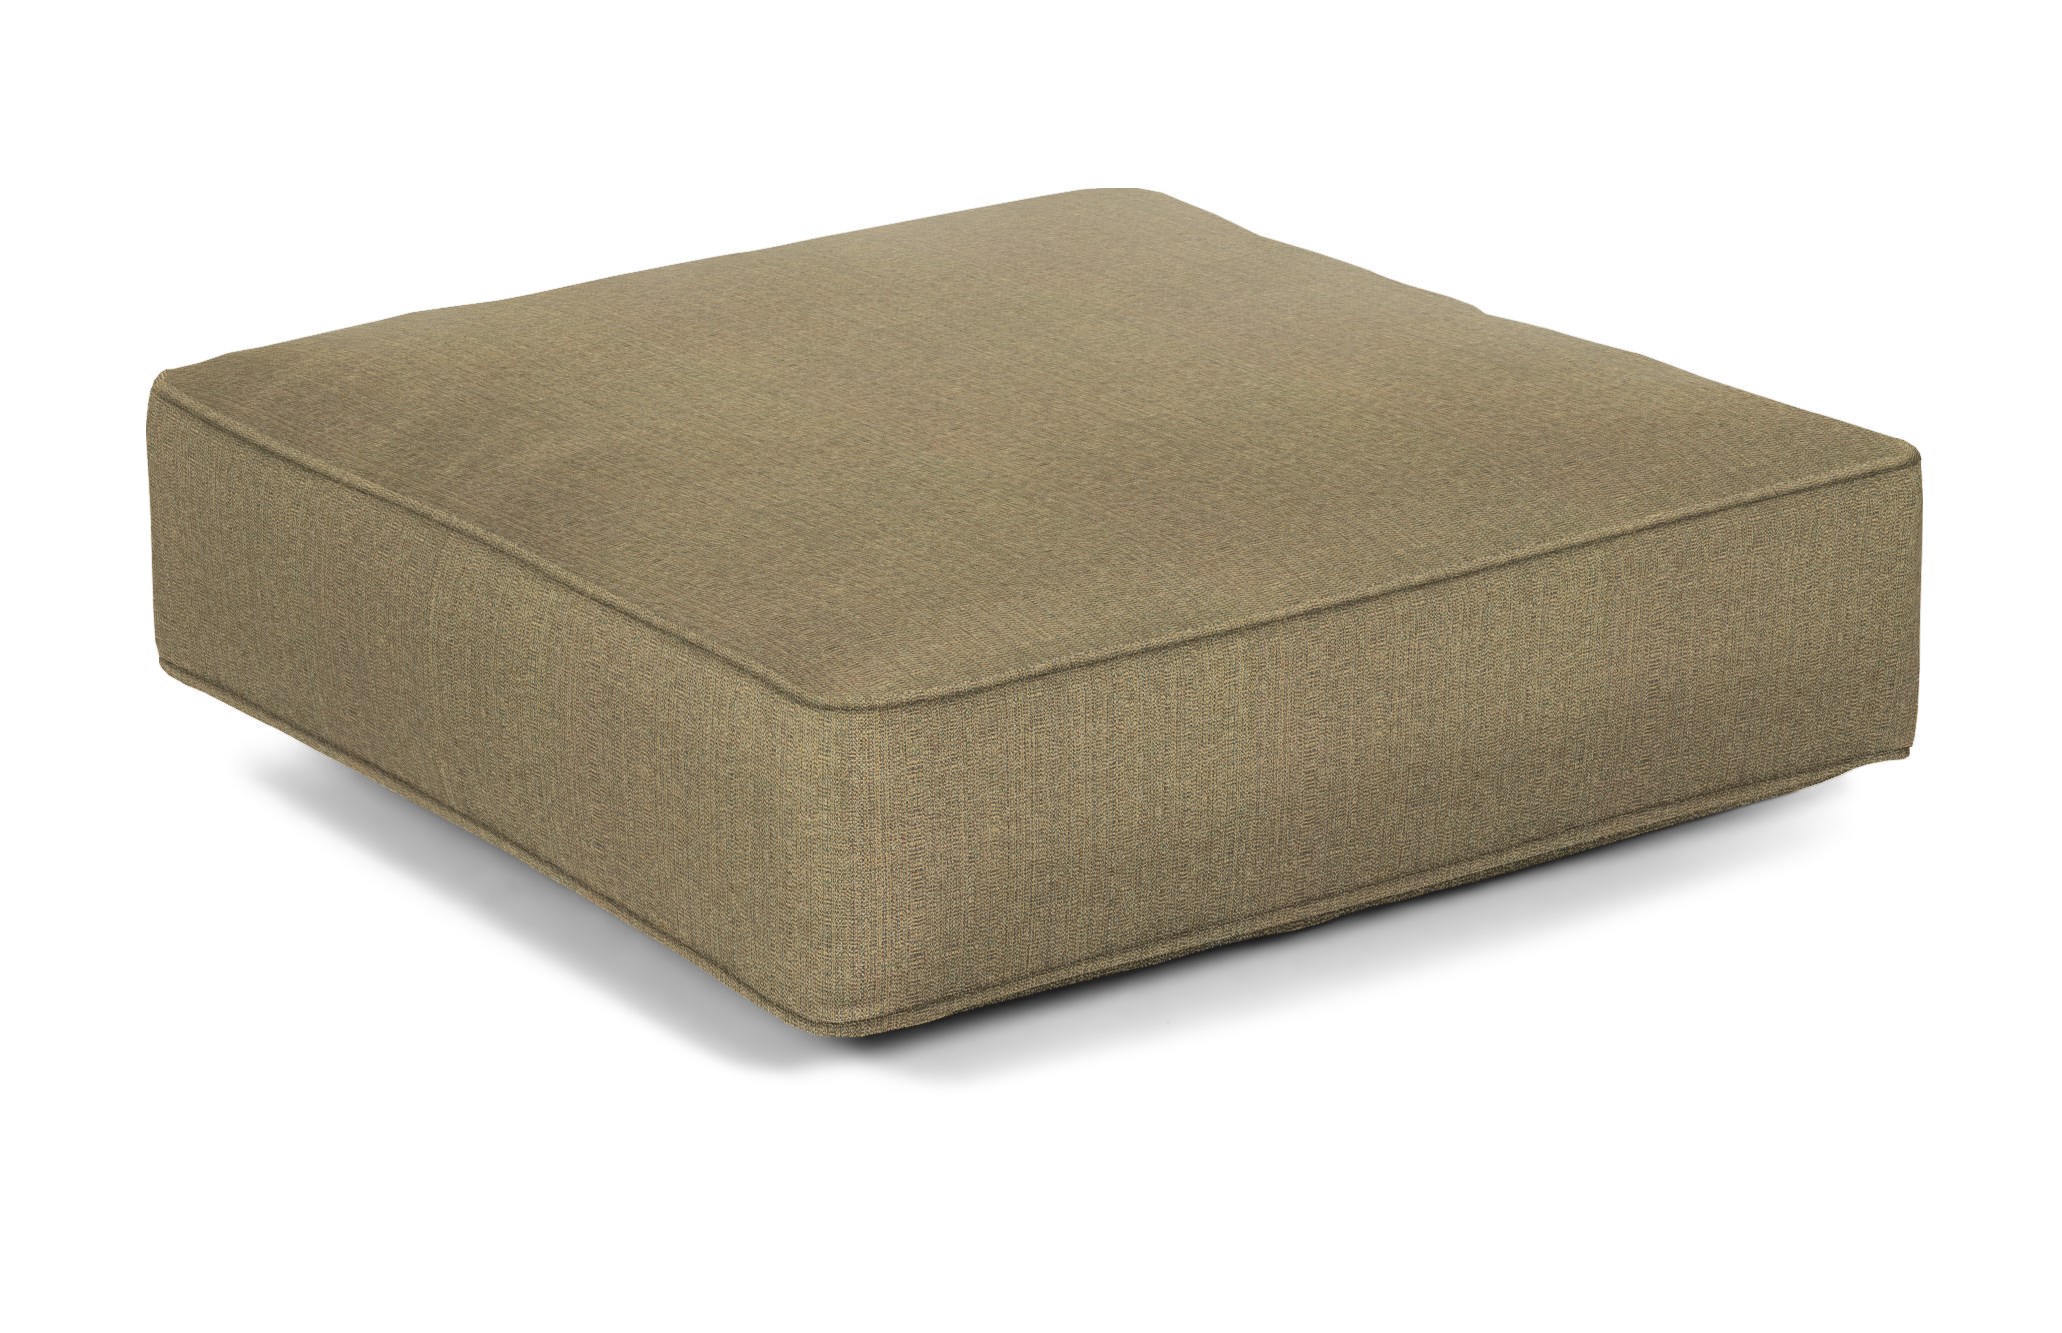 pampas linen club square ottoman cushion product image